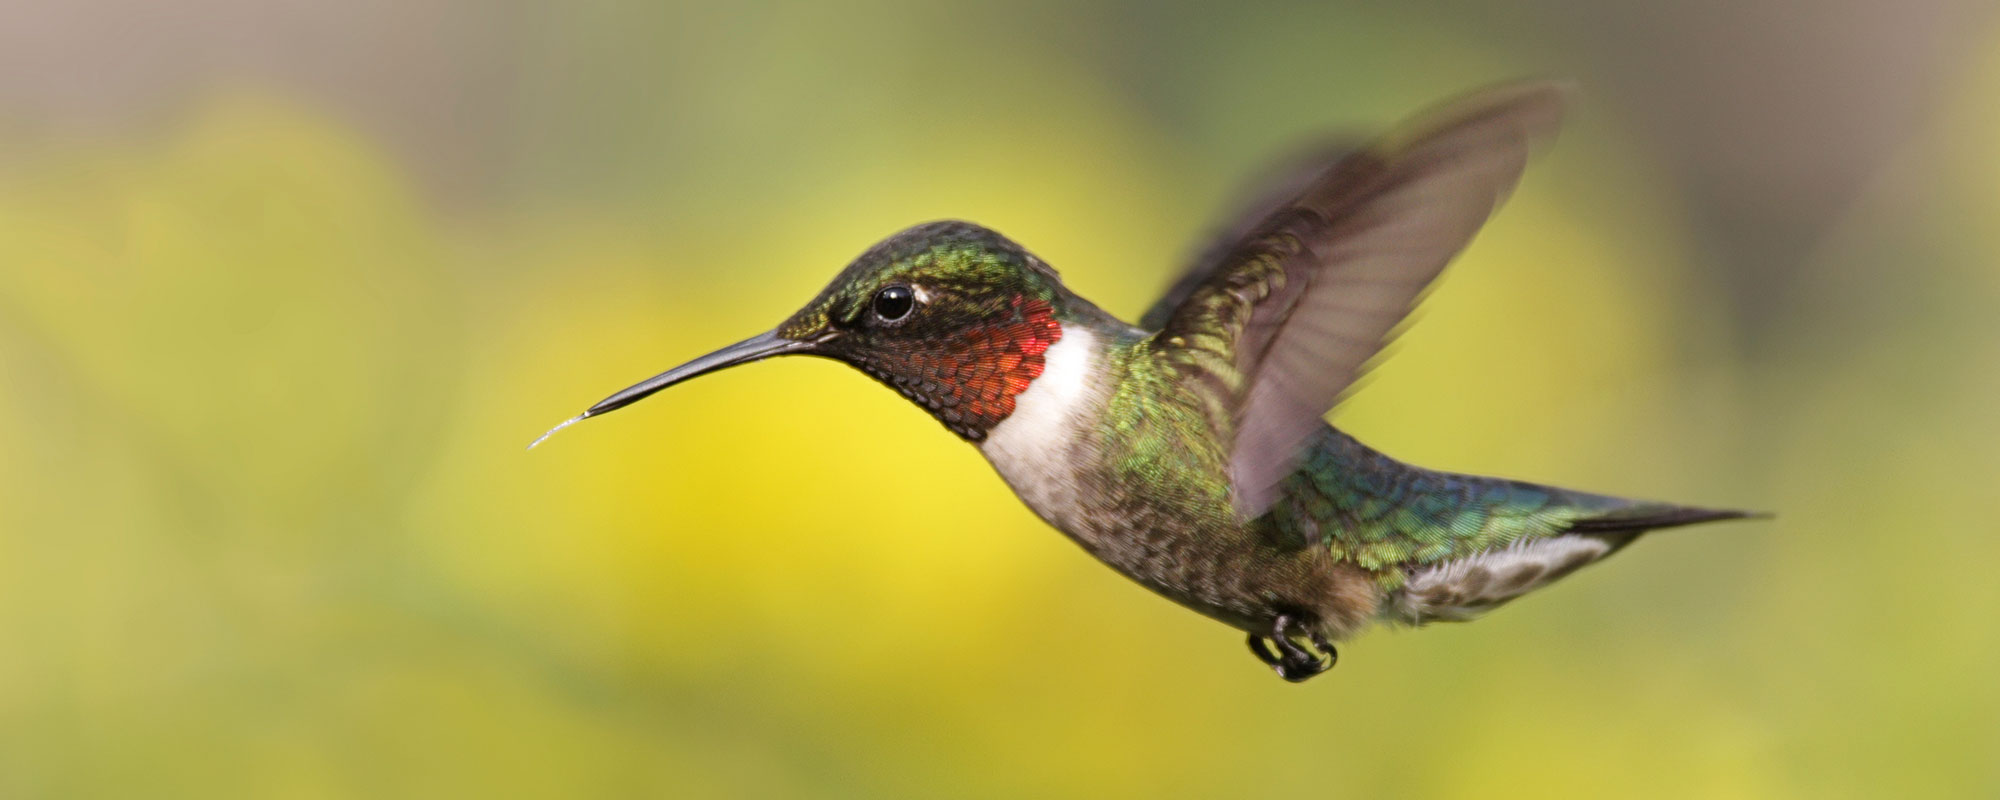 A Ruby-throated hummingbird in mid-flight